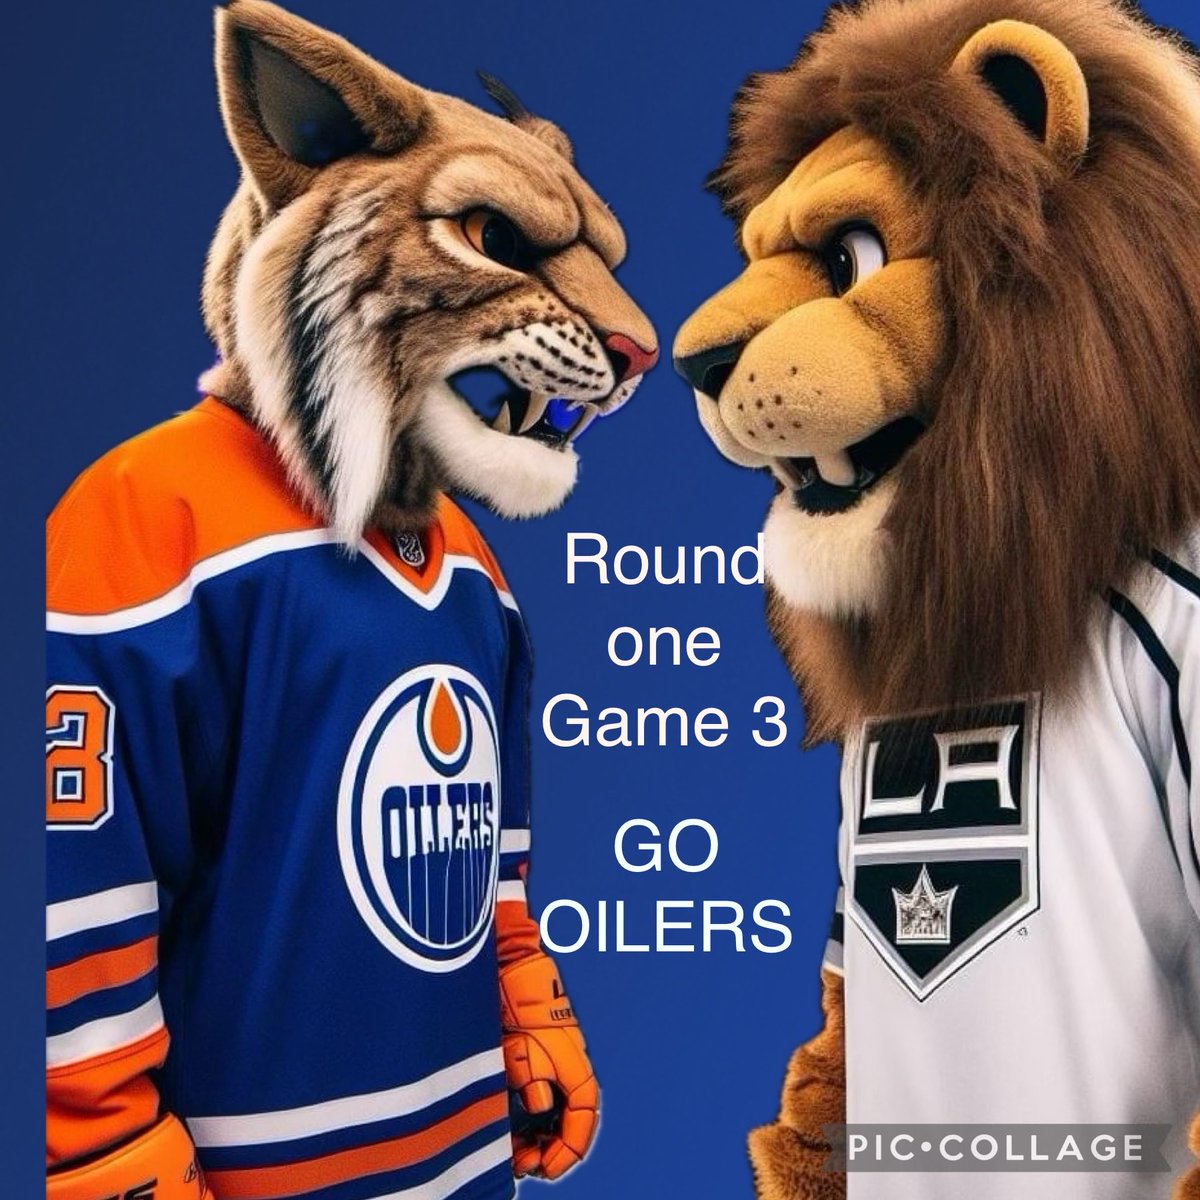 Let's go Oilers 💙🧡💙🧡